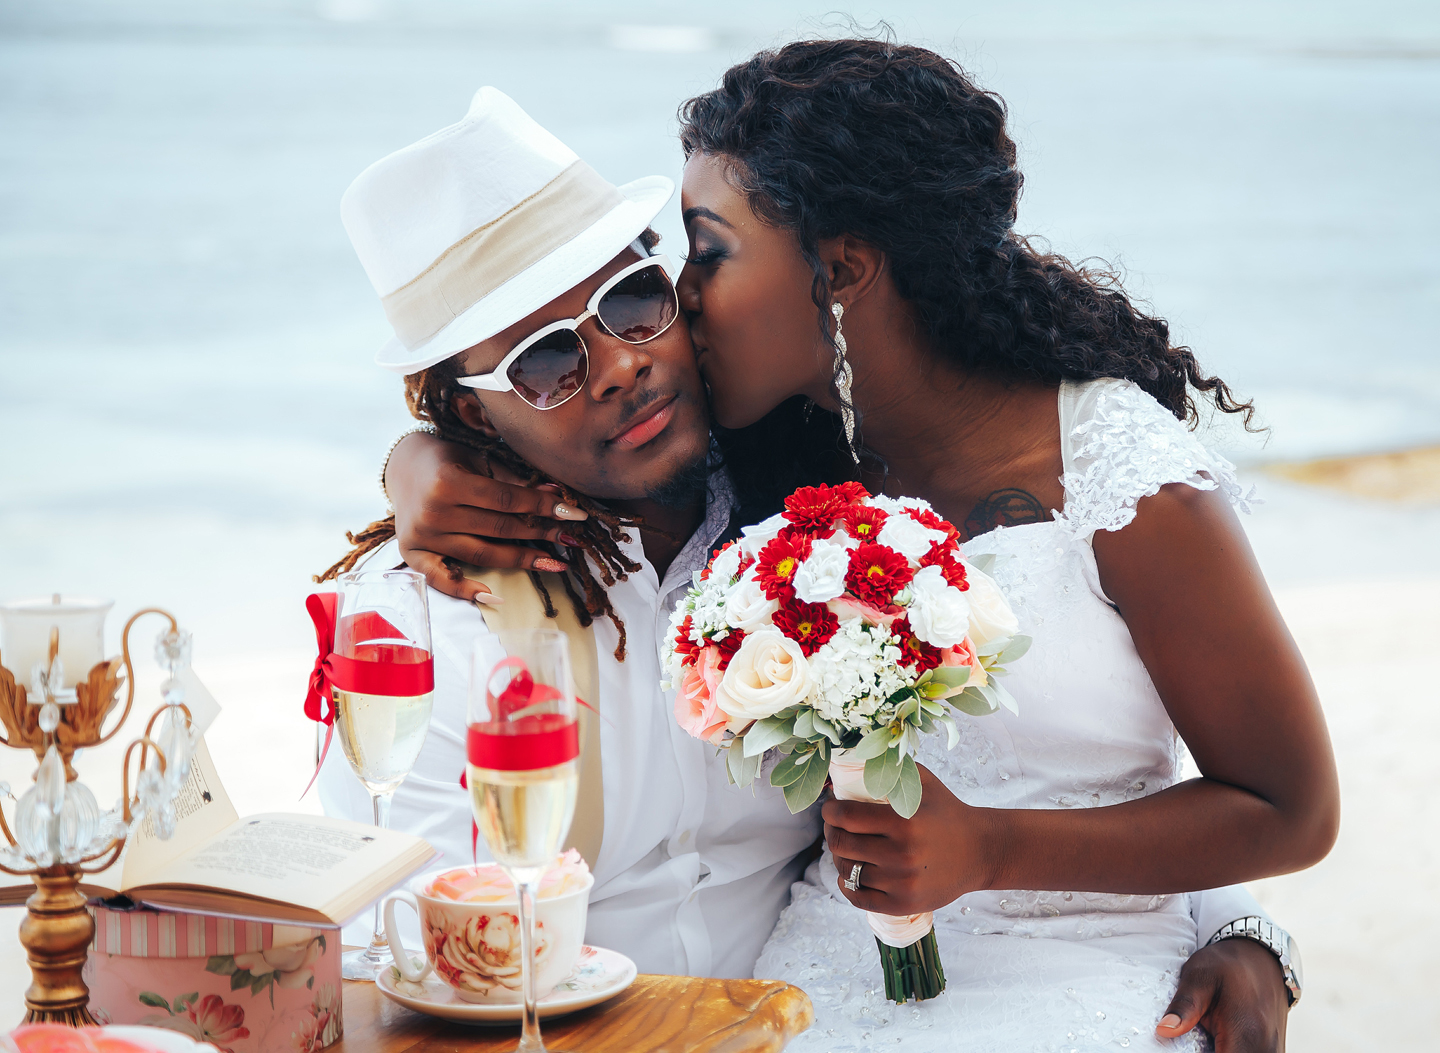 Symbolic Wedding Ceremony In Dominican Republic Lamar And Precious